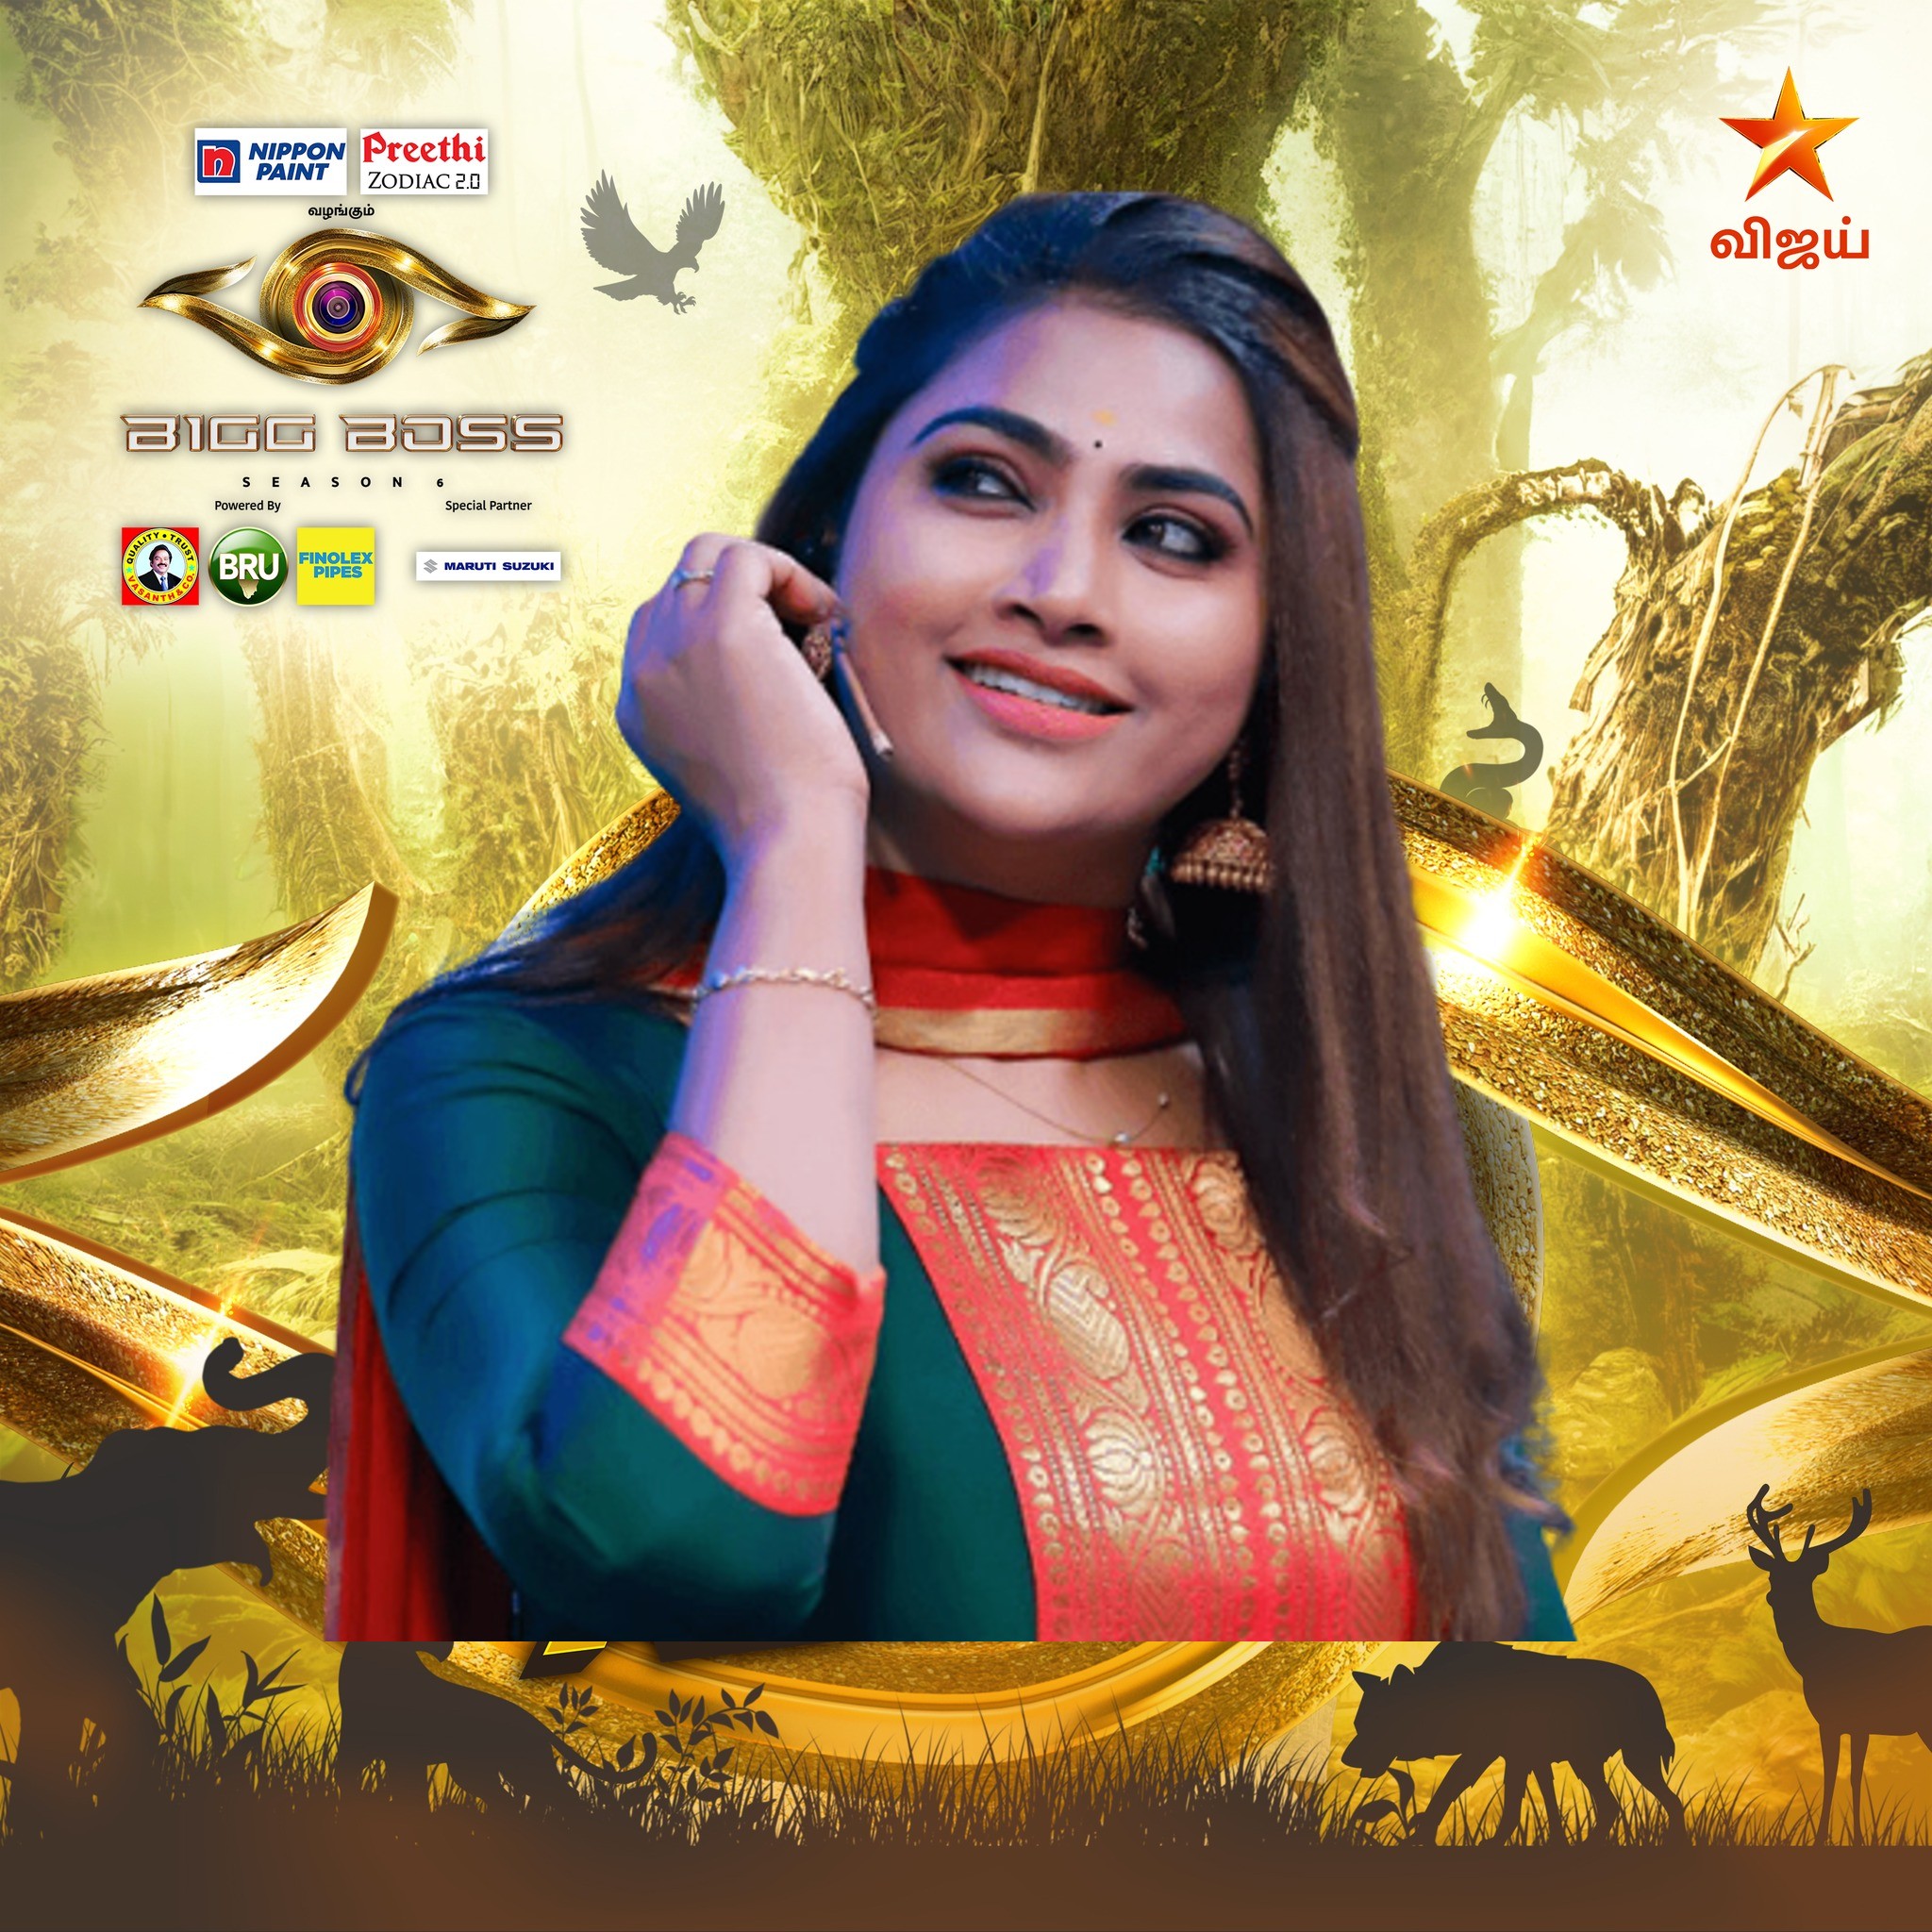 Bigg Boss Tamil contestant season 6 Myna